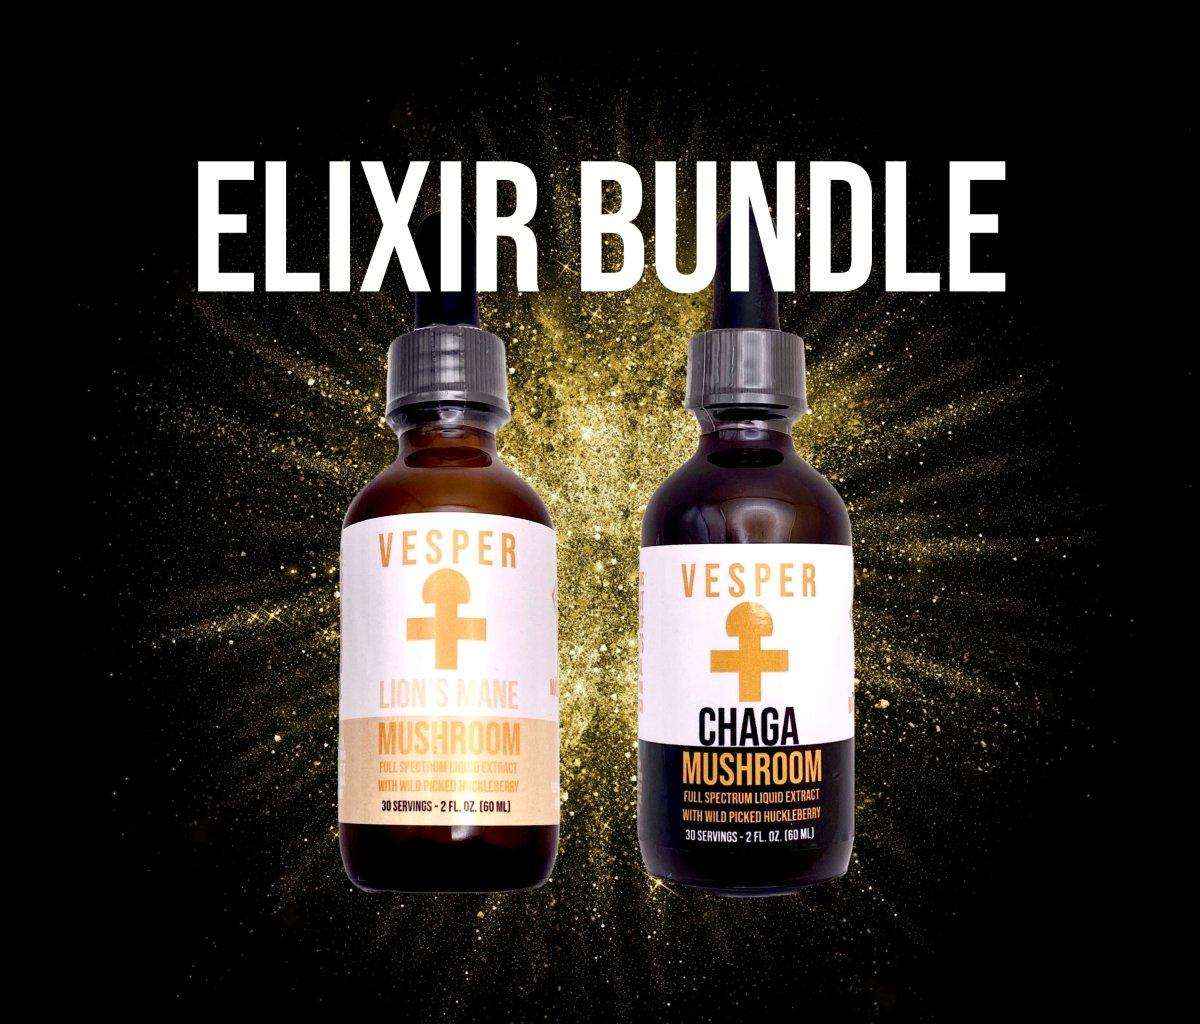 Elixir Bundle - Lion's Mane and Chaga Liquid Double Extract - VESPER MUSHROOMSMushroom Extract Bundlesvespermushrooms